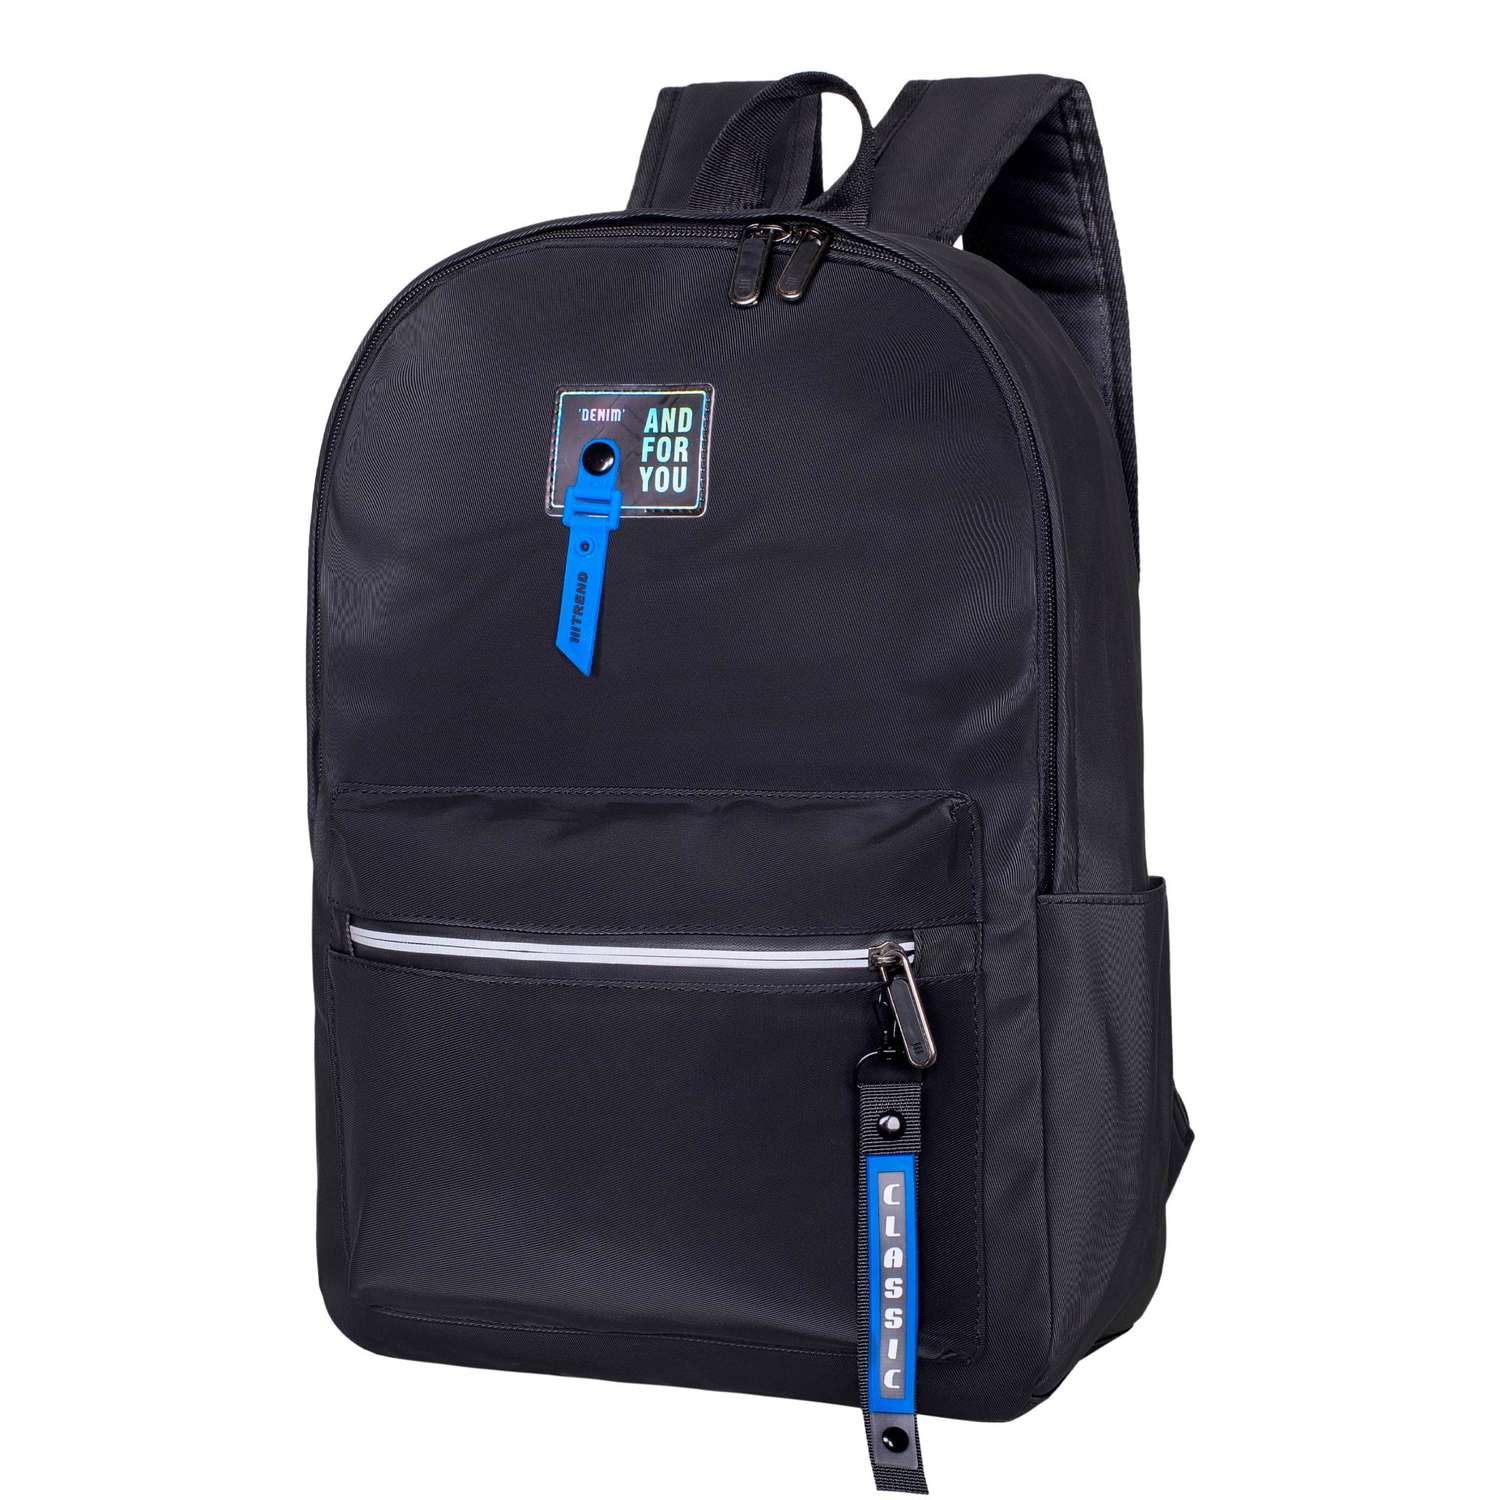 Рюкзак MERLIN G704 черно-синий - фото 4